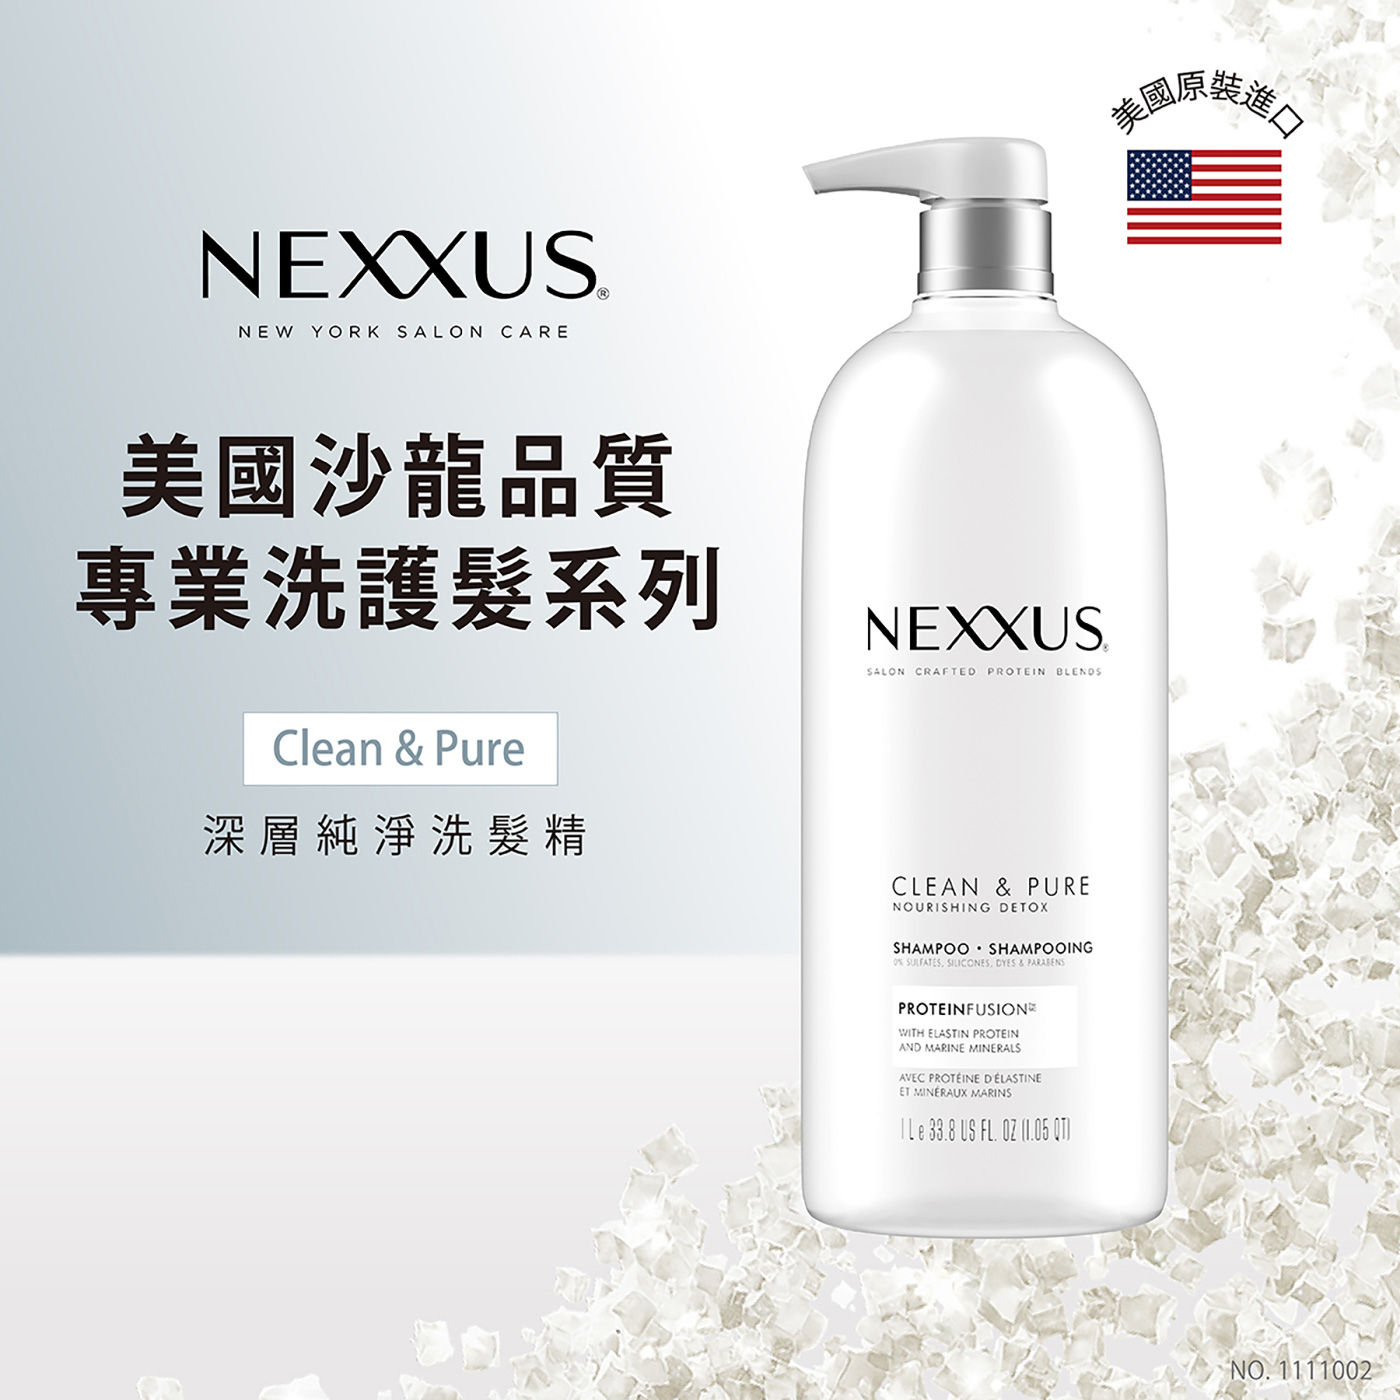 NEXXUS 深層純淨洗髮精美國沙龍品質專業洗護髮系列。